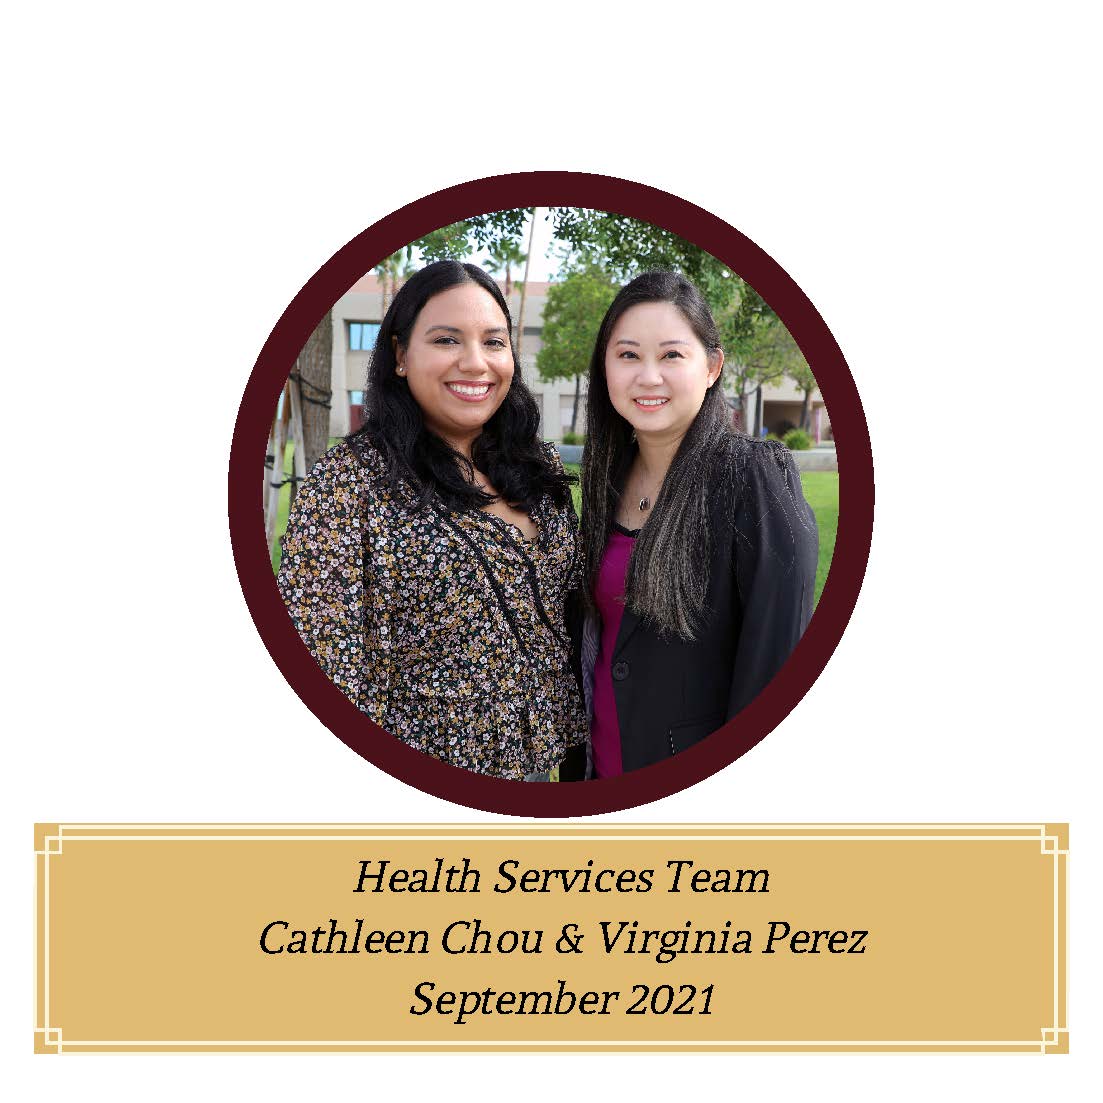 Cathleen Chou & Virginia Perez of Health Services